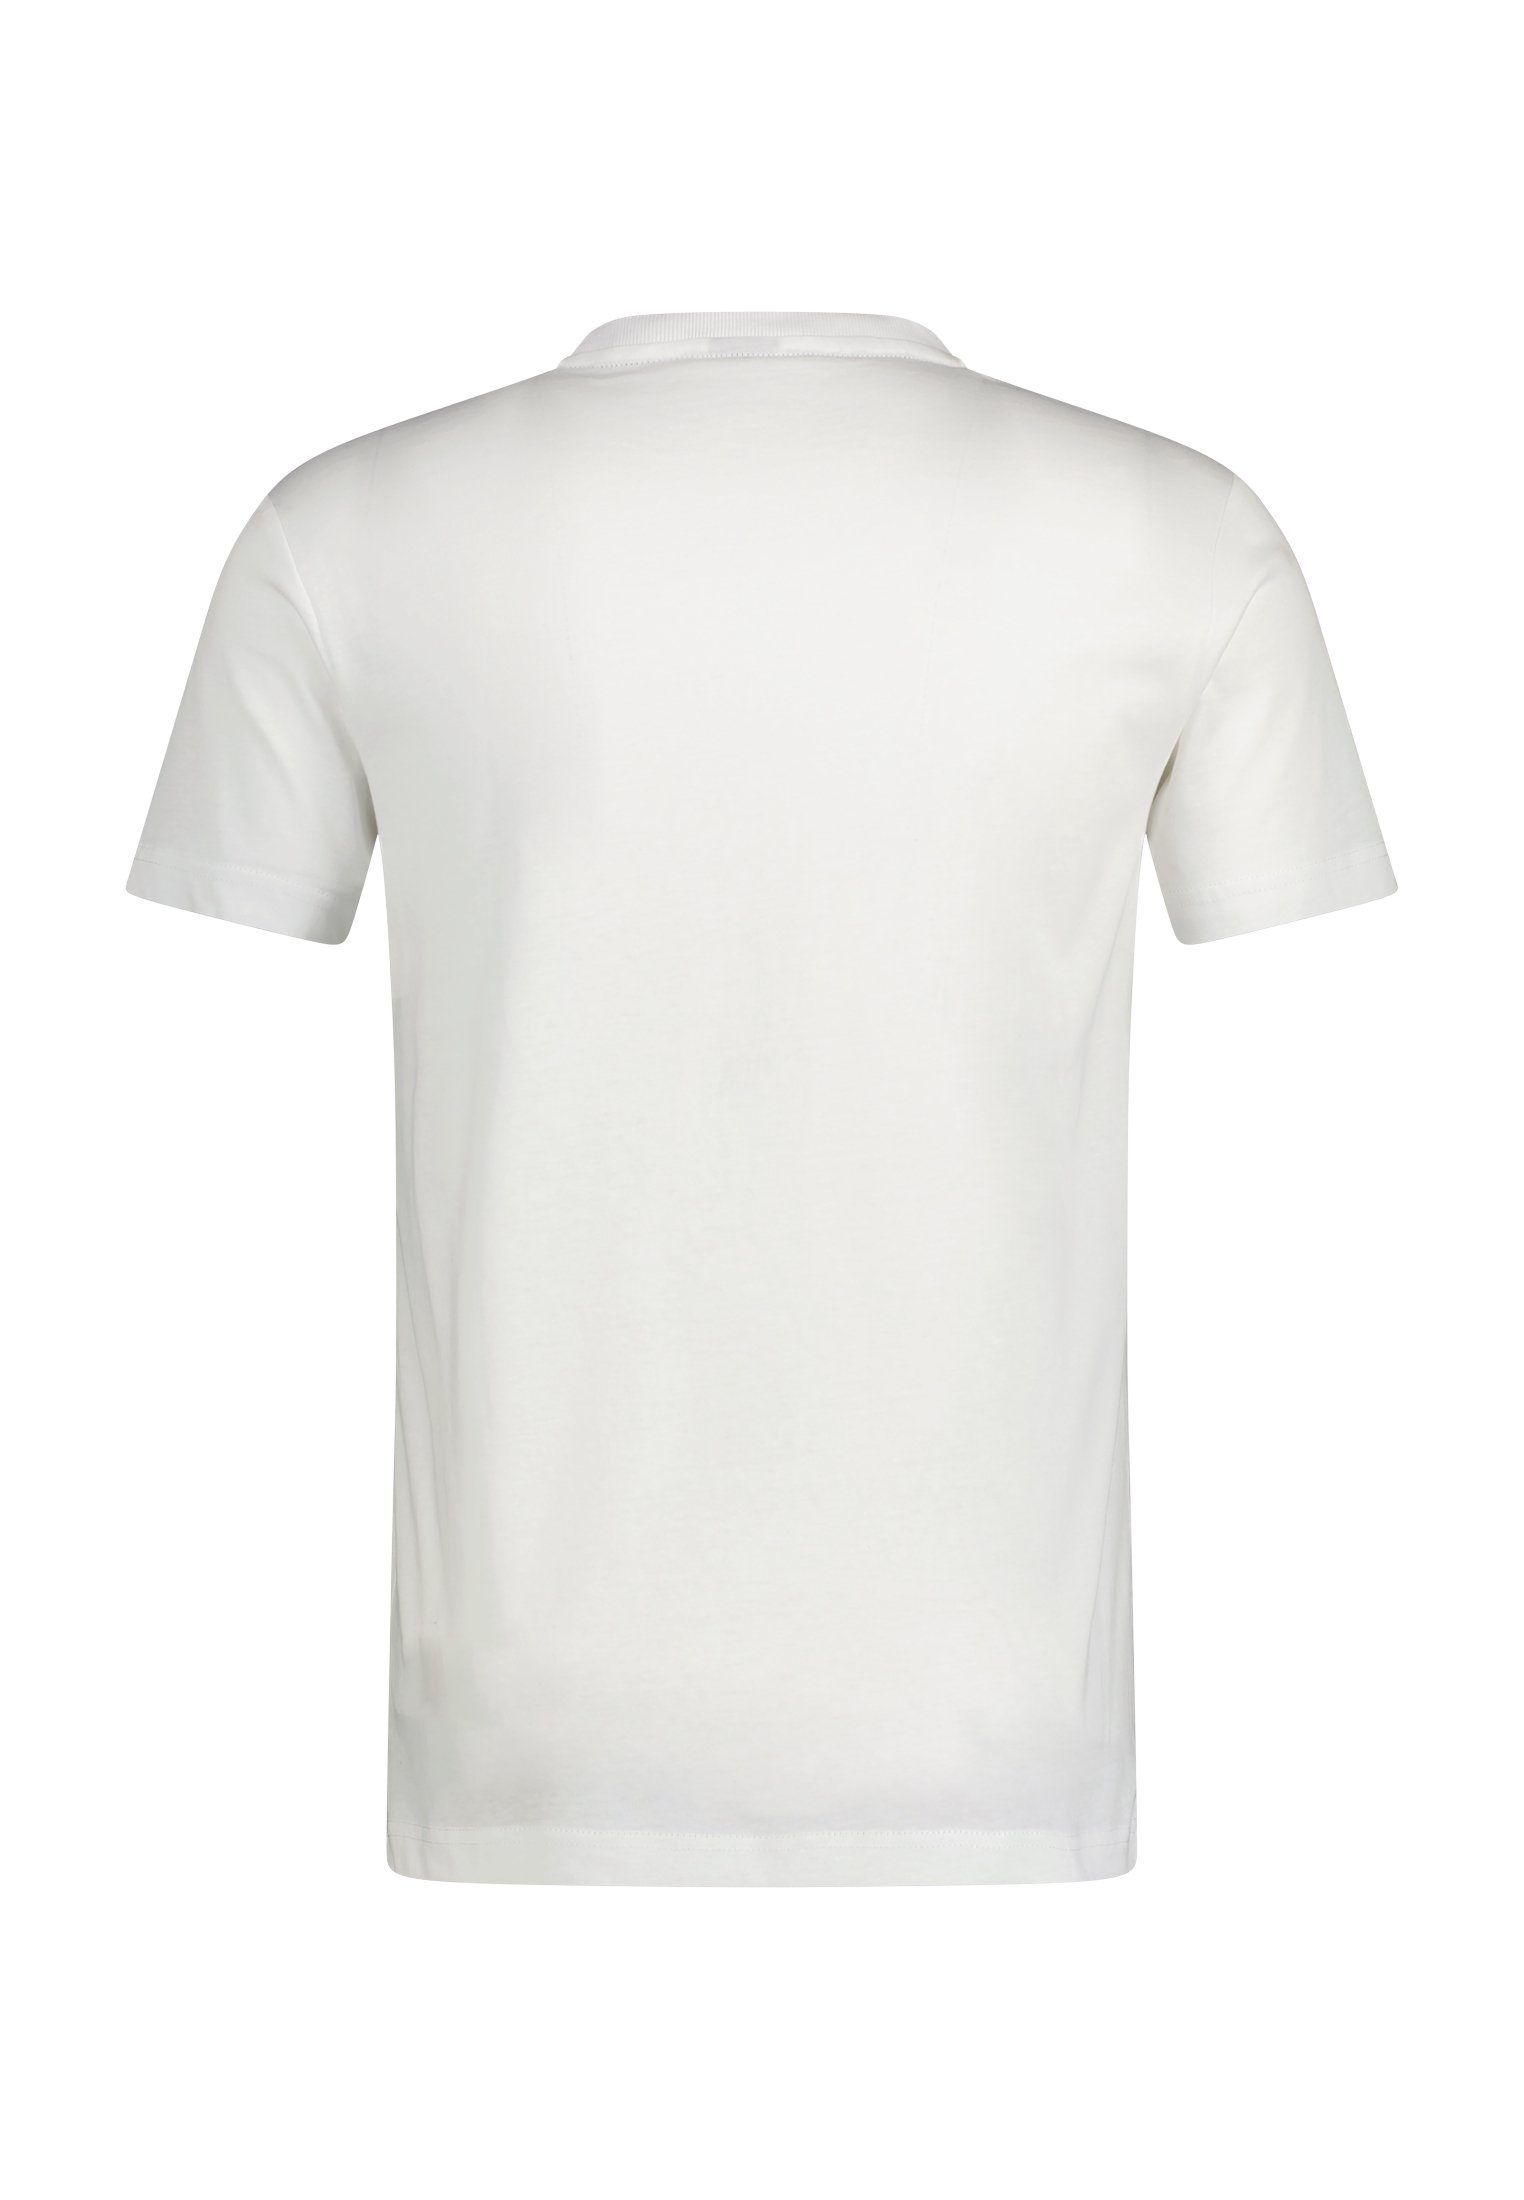 LERROS *Follow T-Shirt the LERROS T-Shirt WHITE sun*